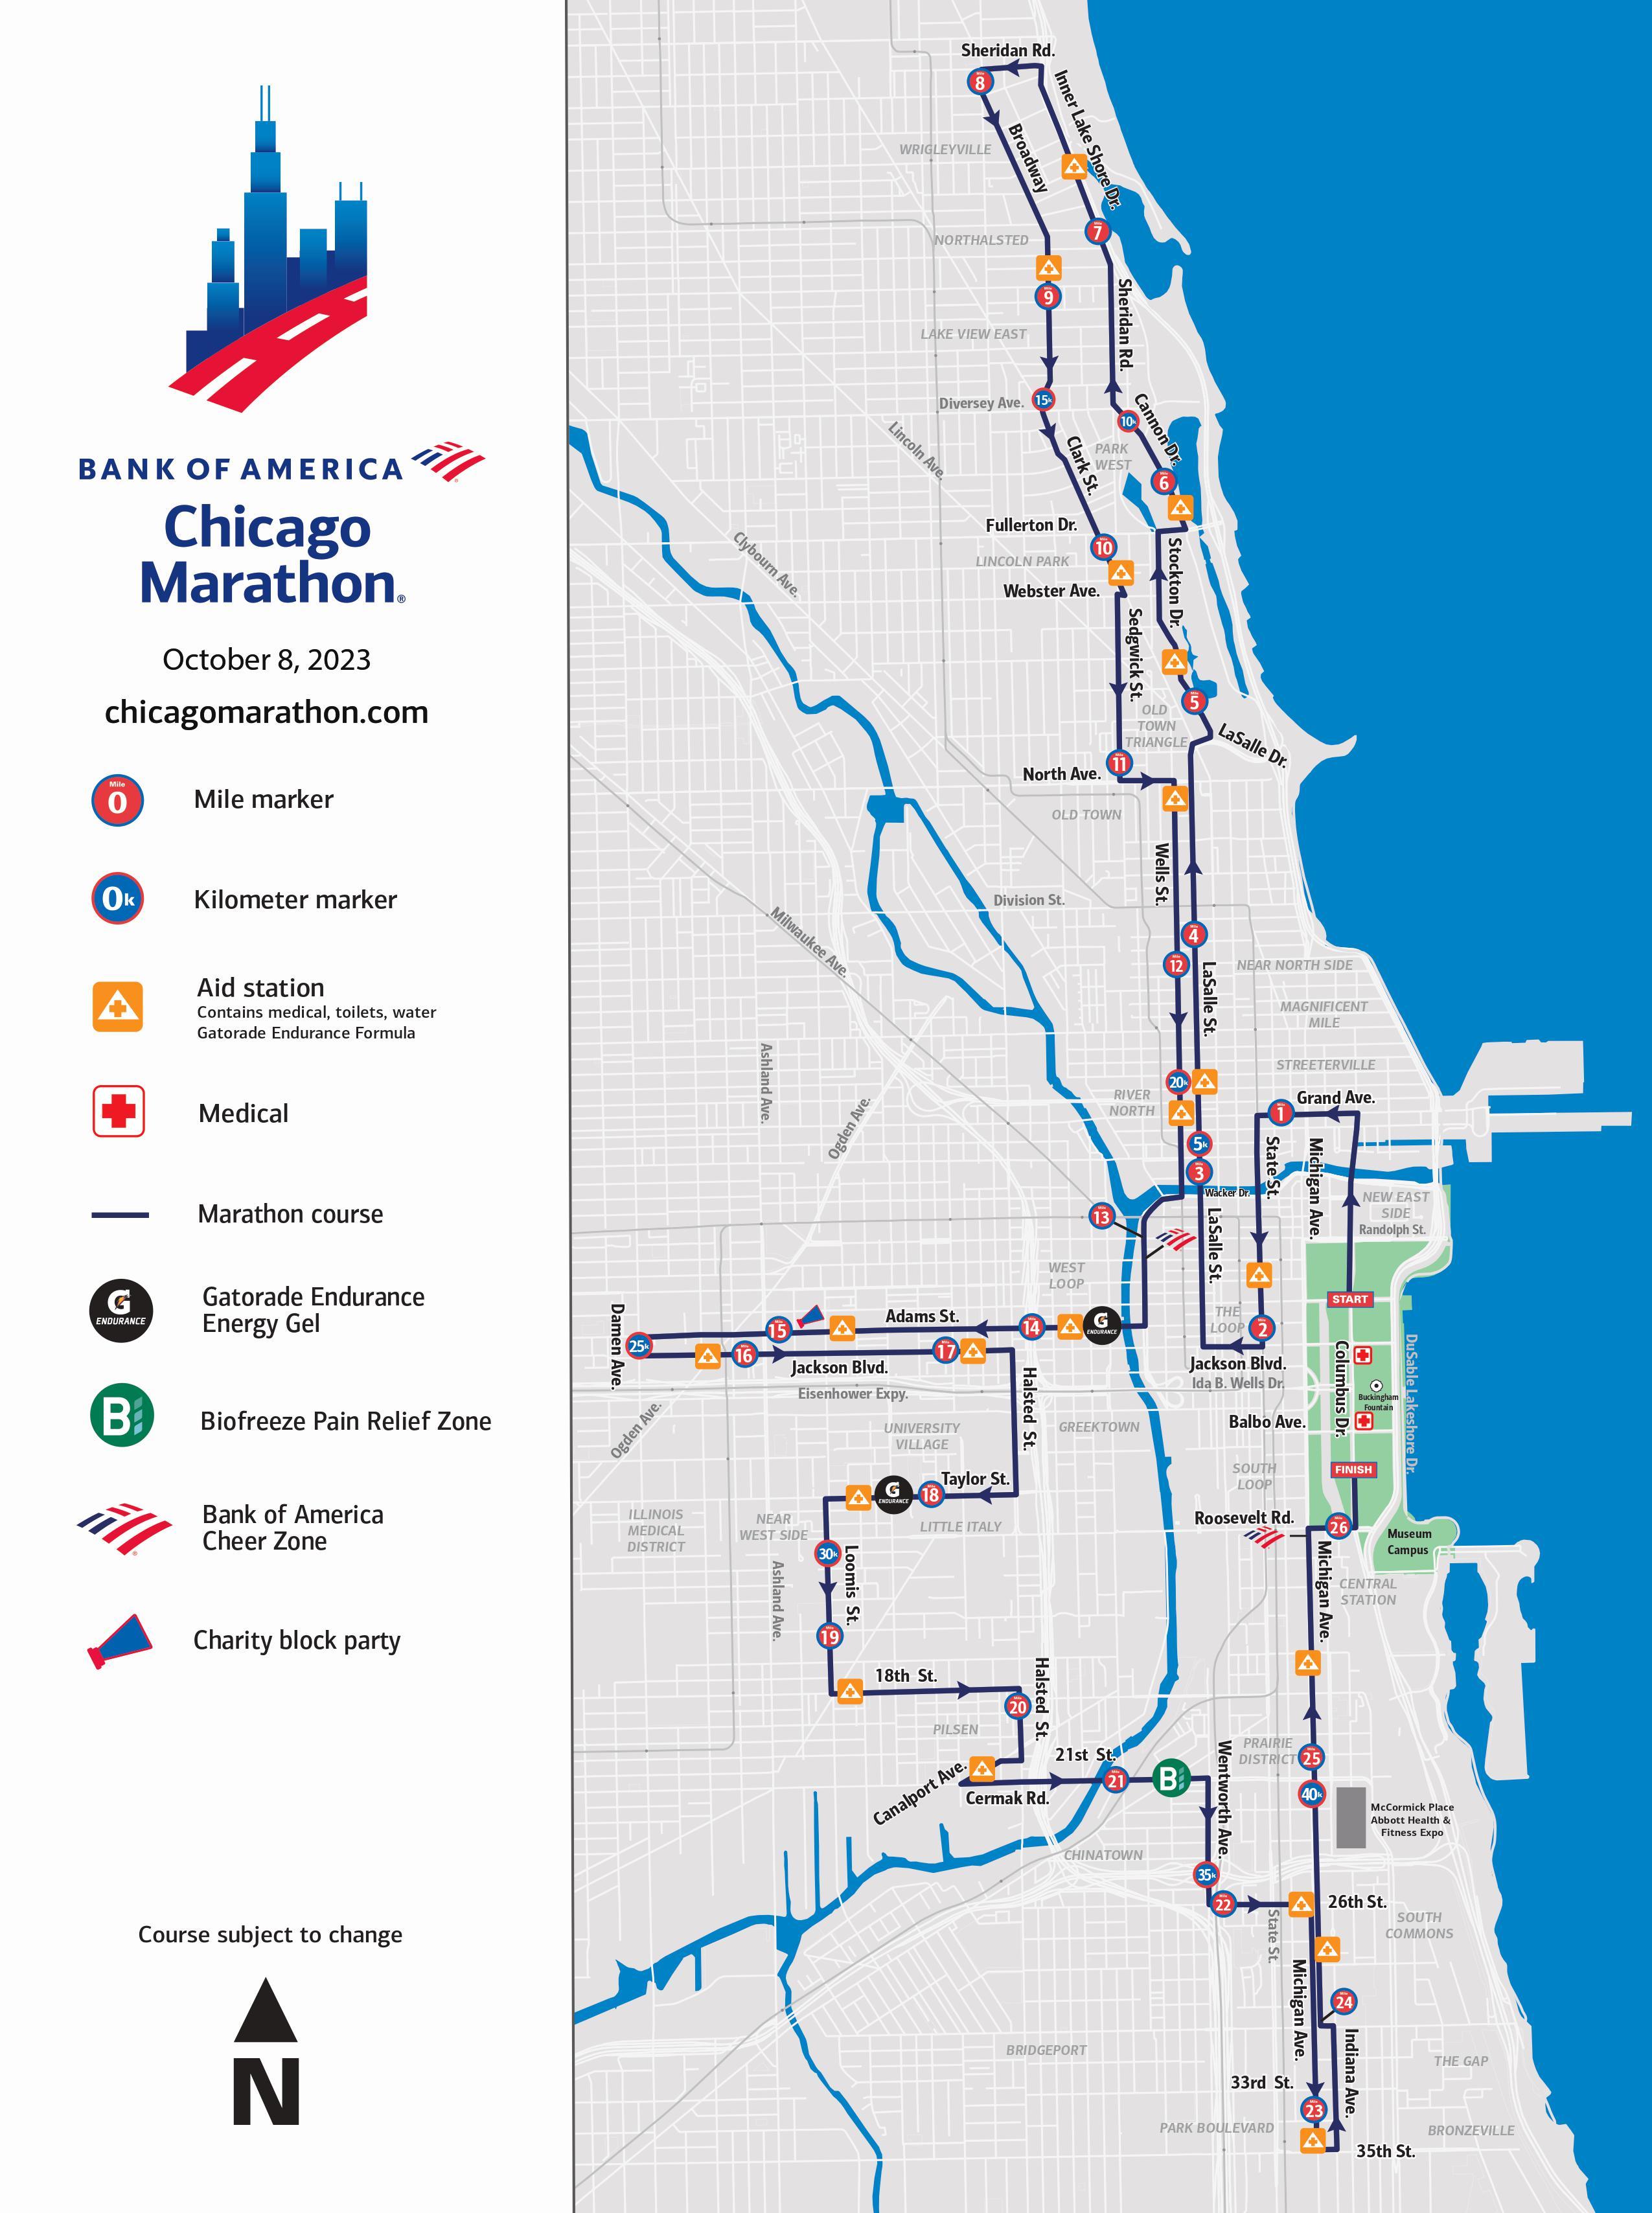 2023-bank-of-america-chicago-marathon-course-map.jpg 